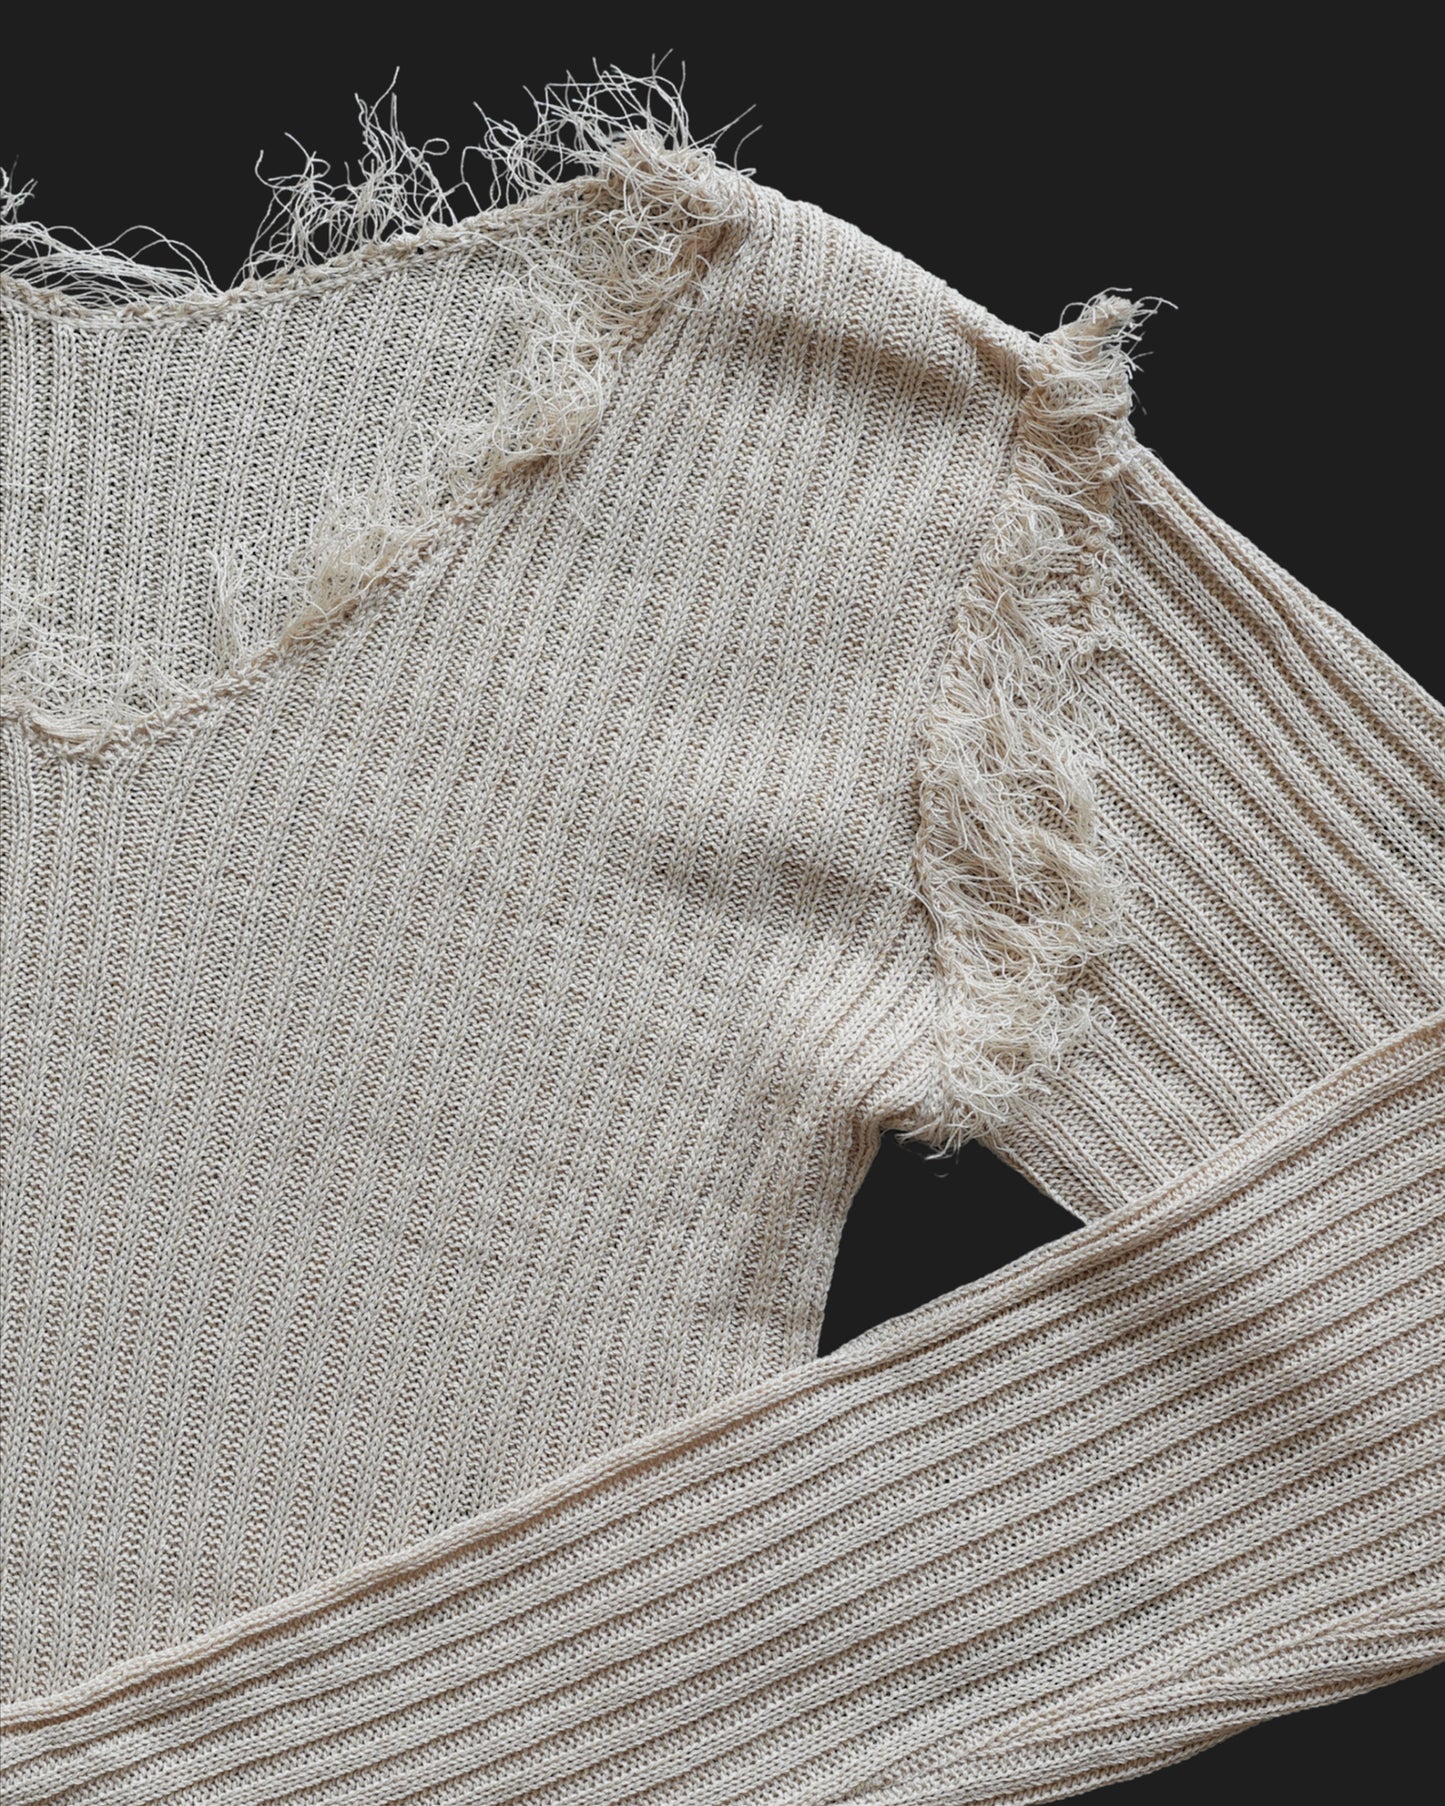 V-neck distressed knit top